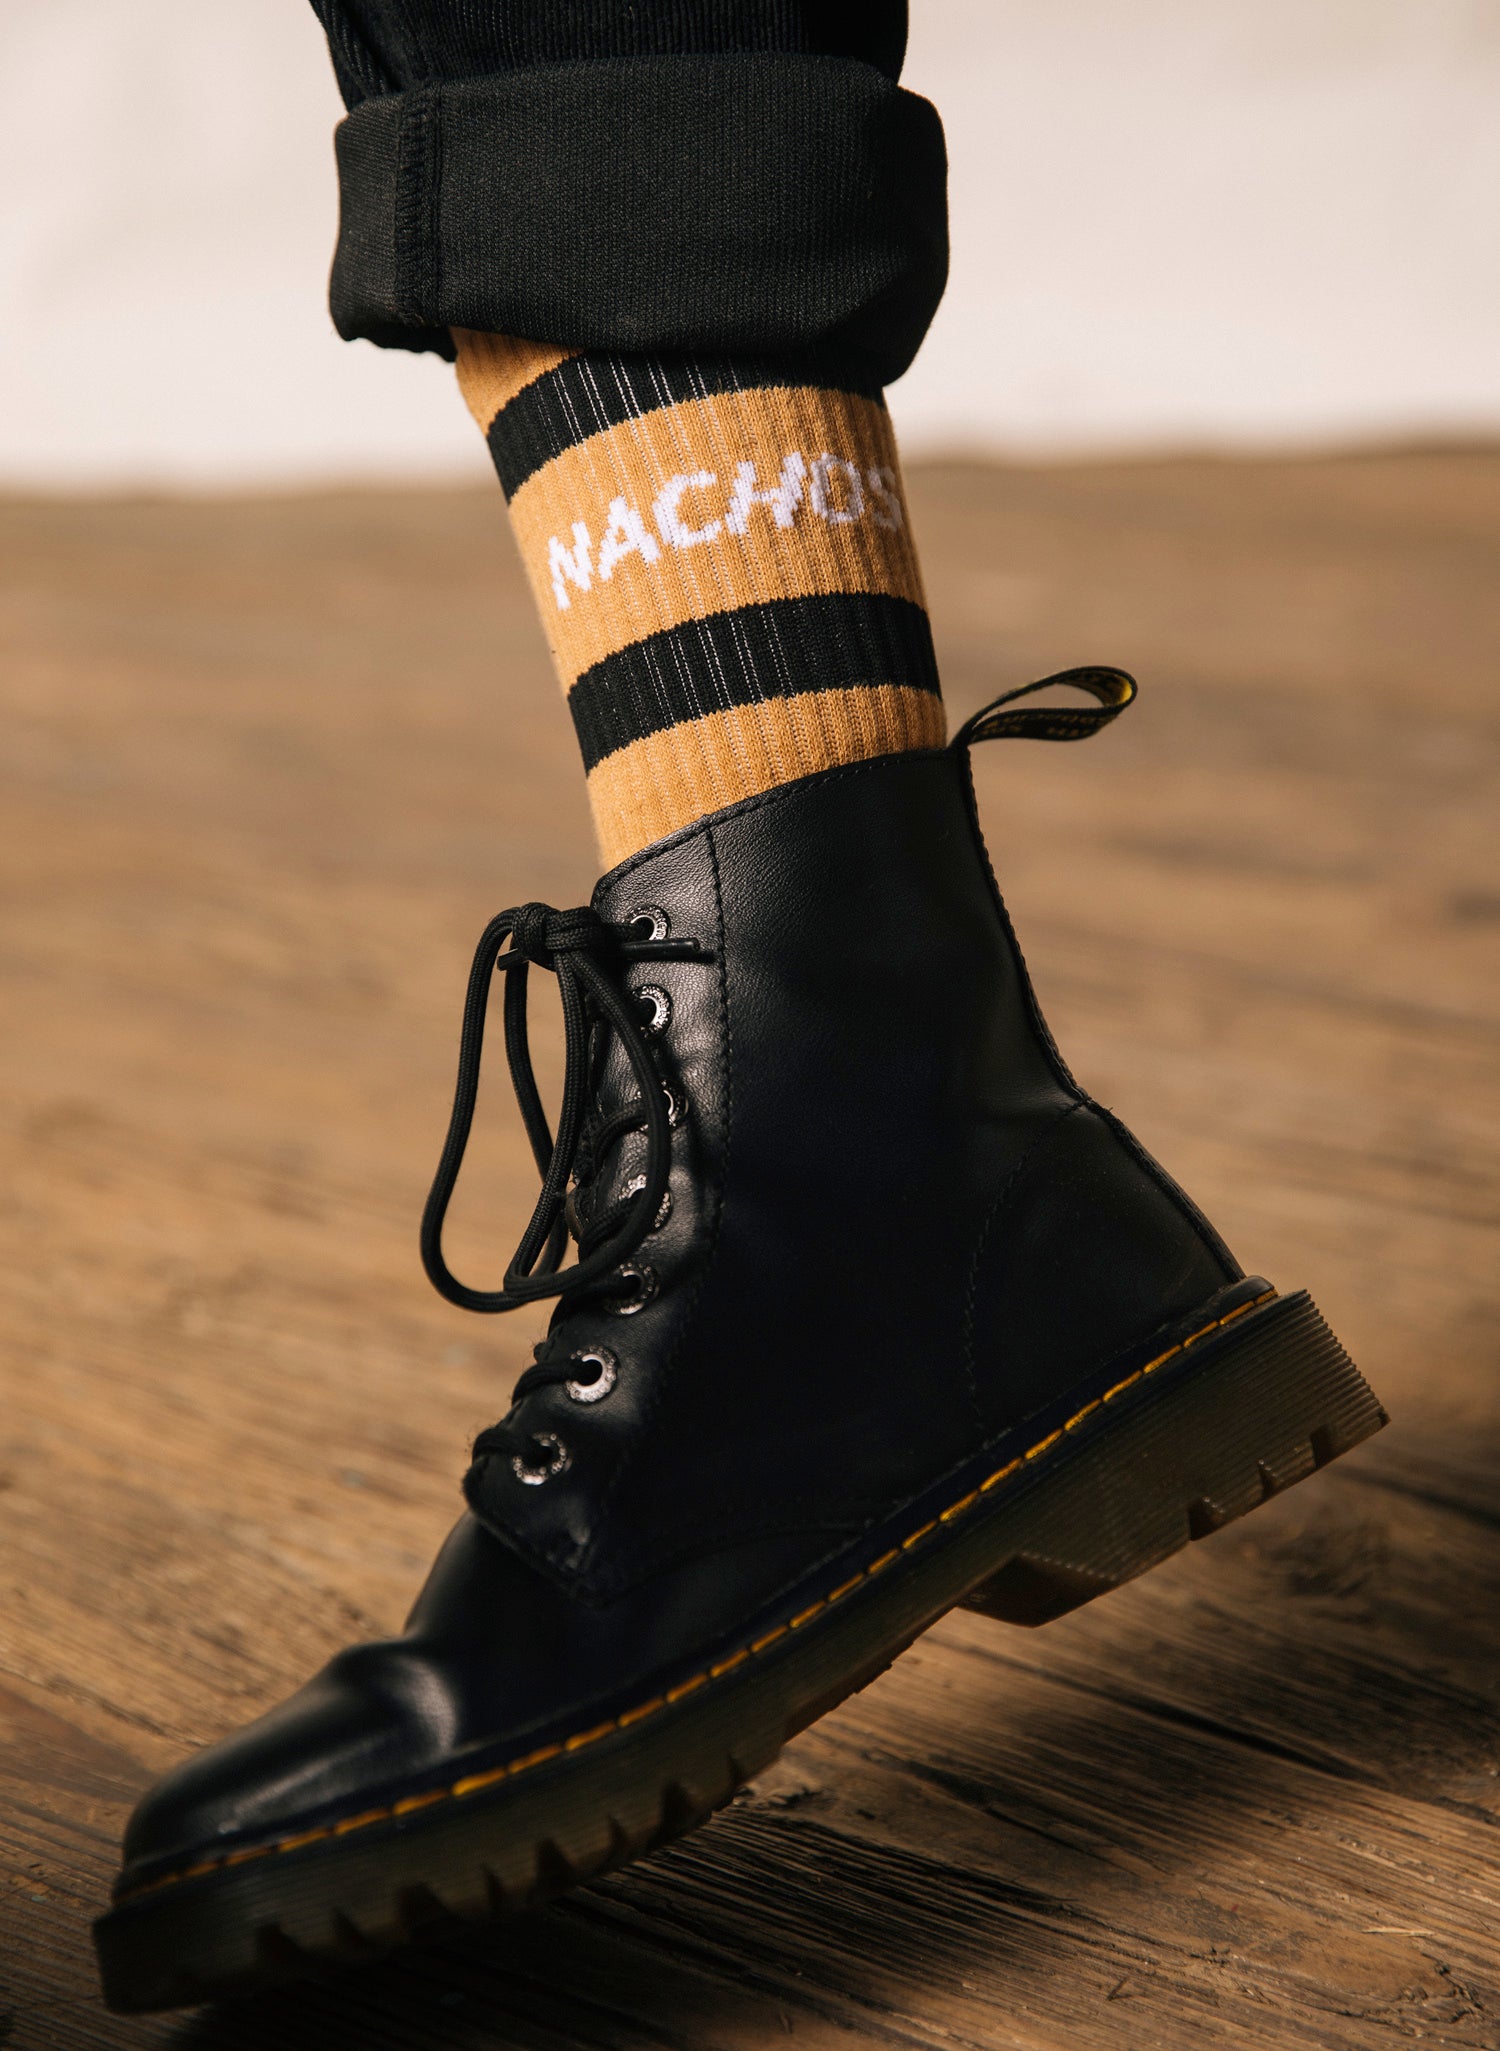 Nachos Fun Foodie Gift Striped Retro Food Crew Socks